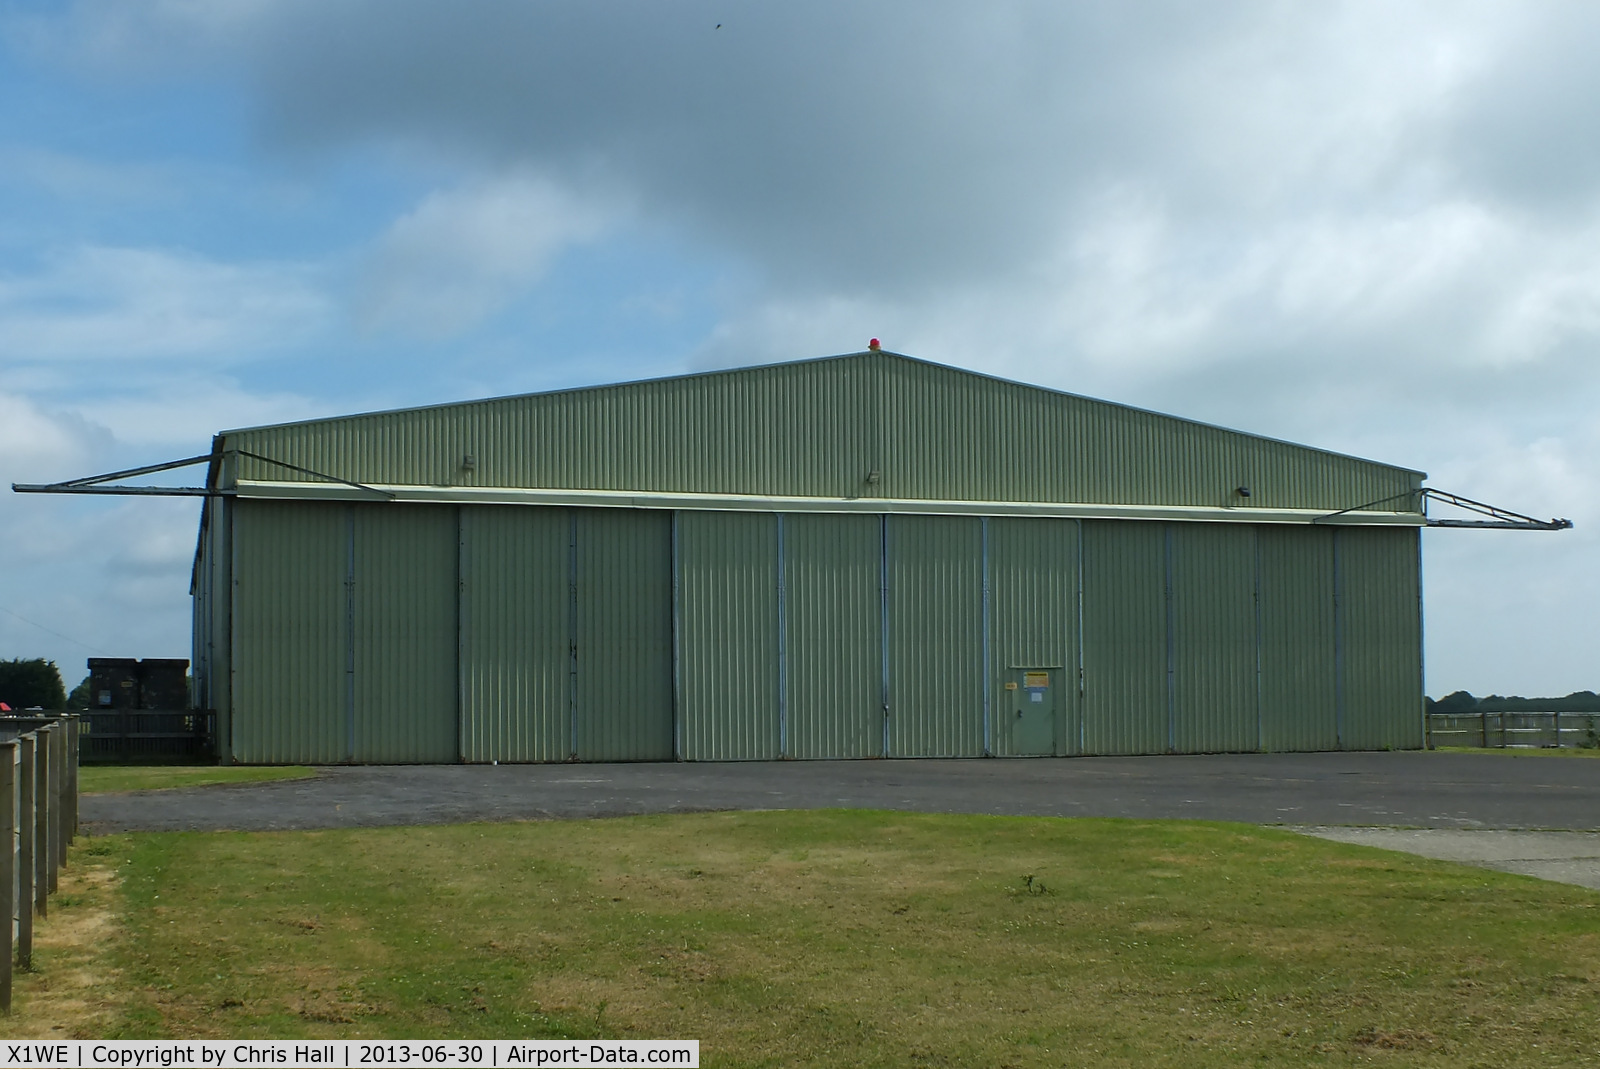 X1WE Airport - Parachute club hangar at Weston on the Green